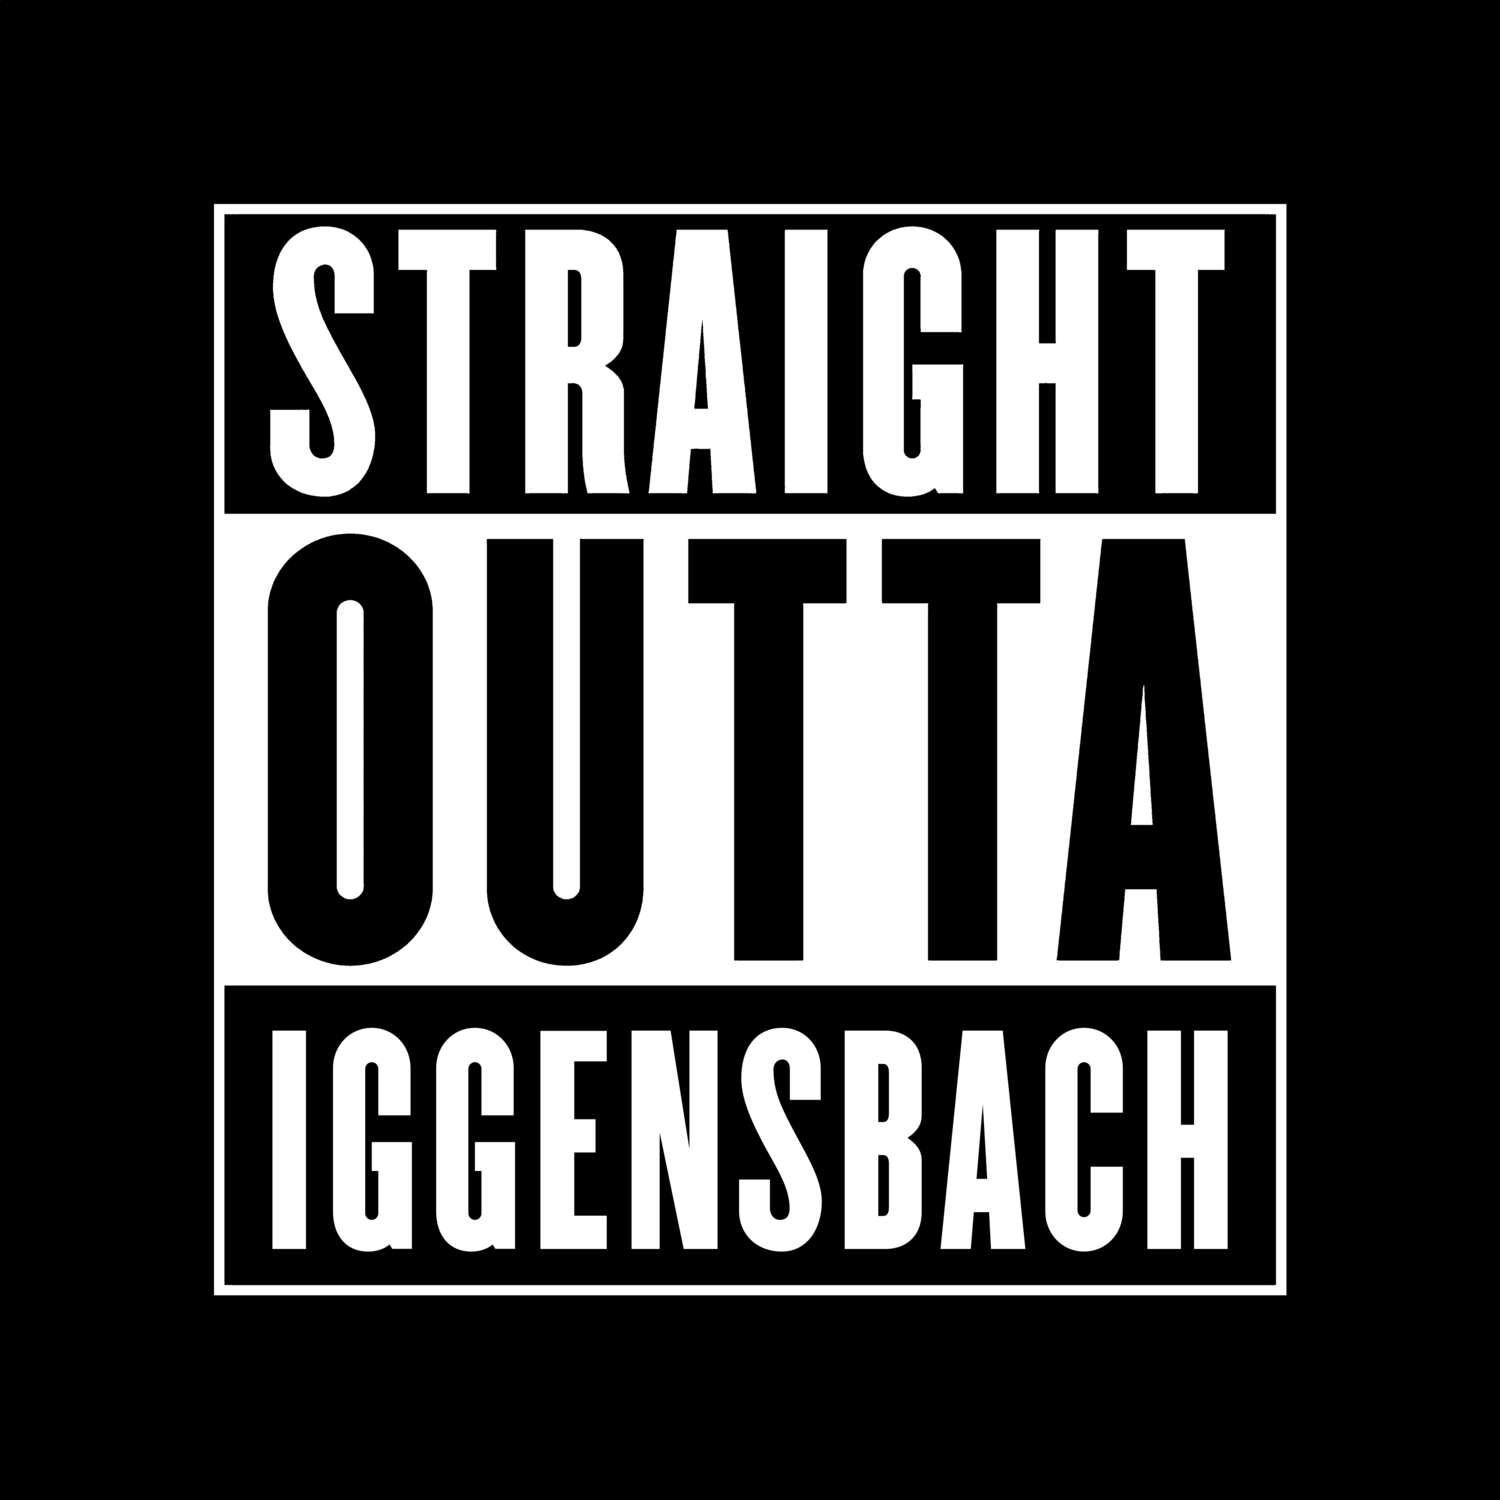 Iggensbach T-Shirt »Straight Outta«